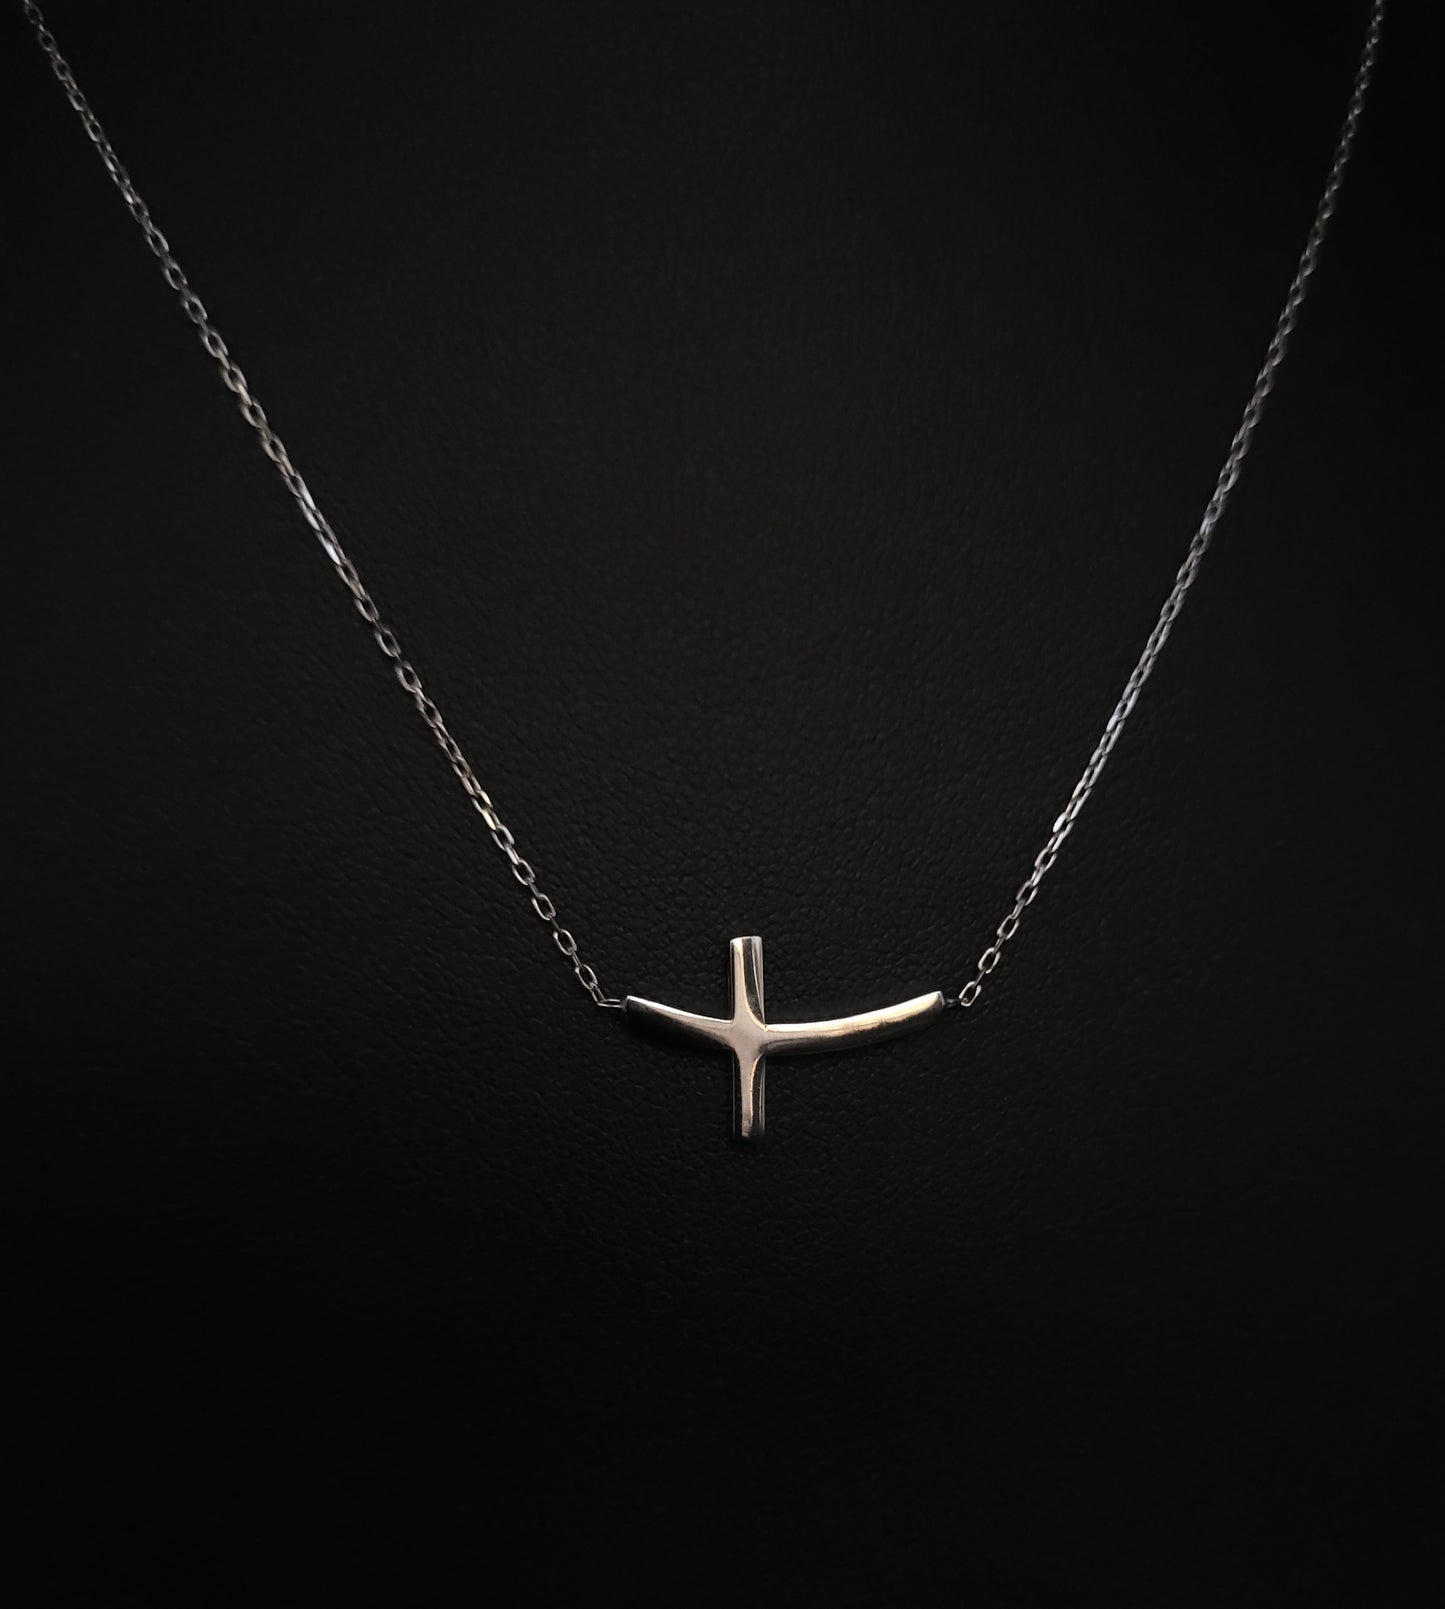 HKS-1004 Silberkette mit Kreuz